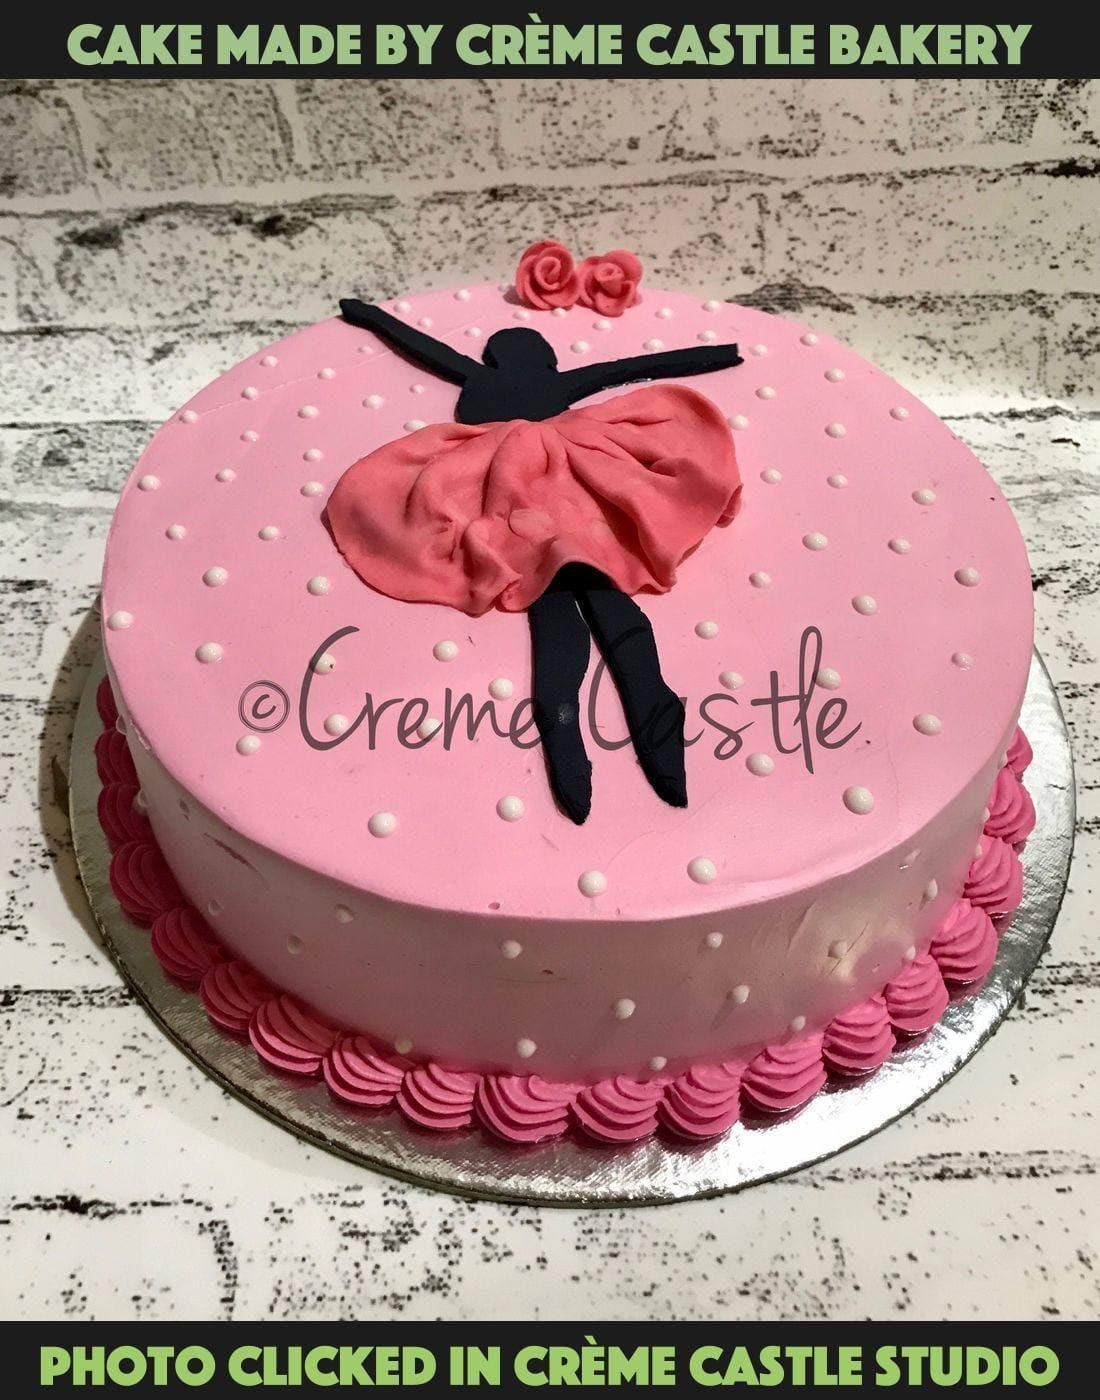 Birthday Cakes Delivery | Patisserie Valerie